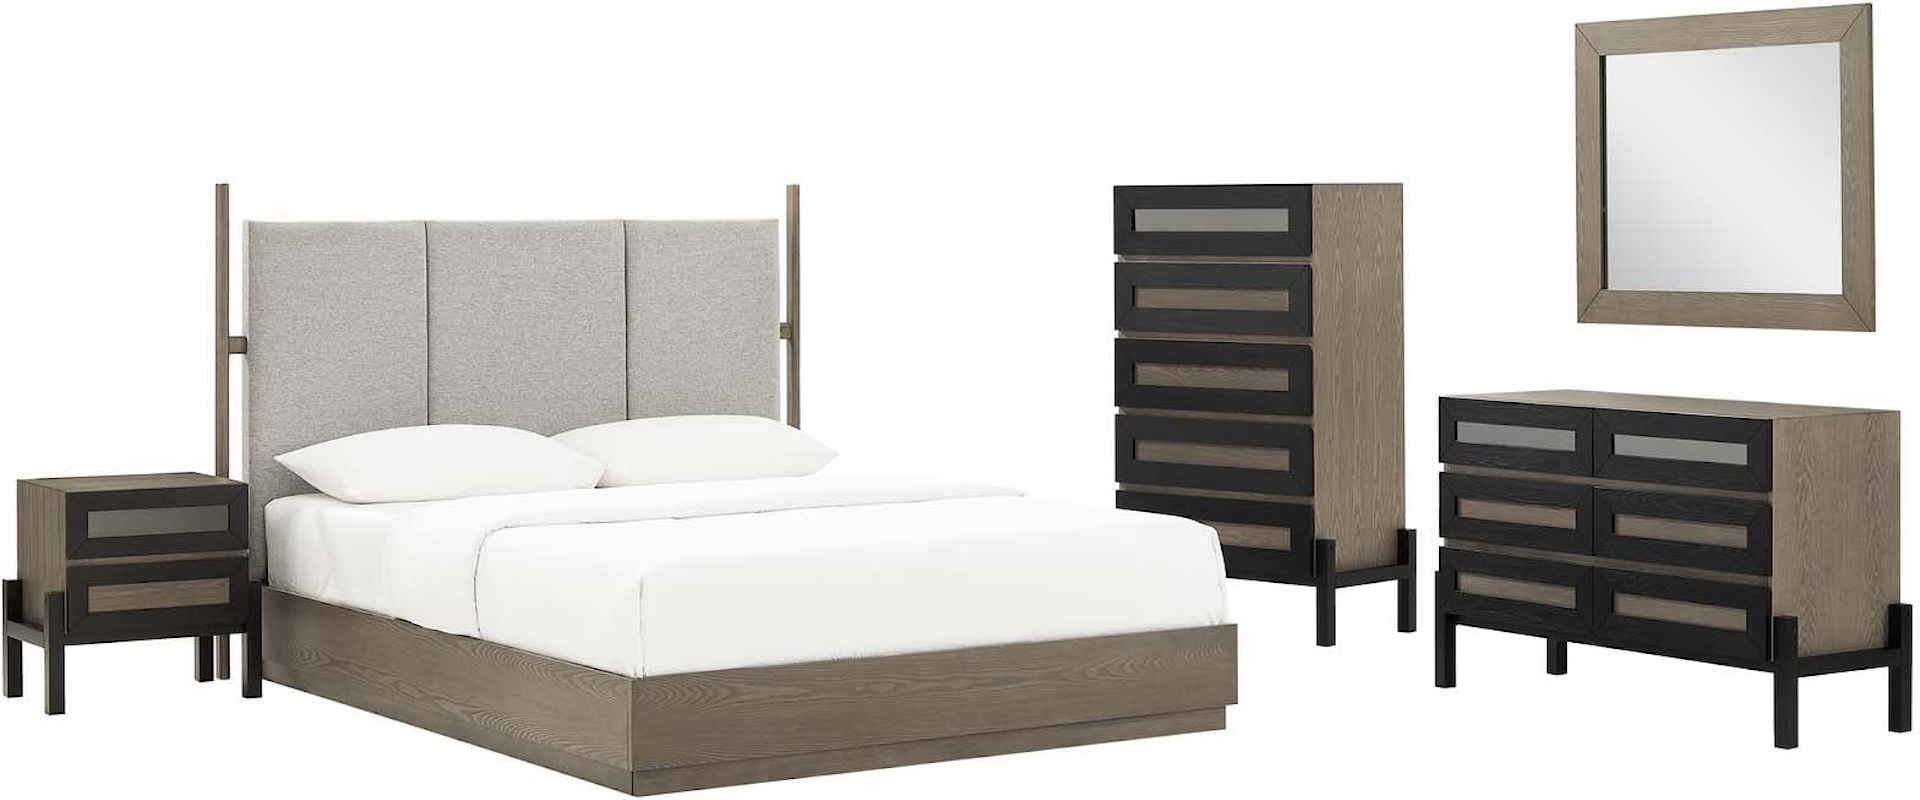 Merritt 5 Piece Upholstered Bedroom Set